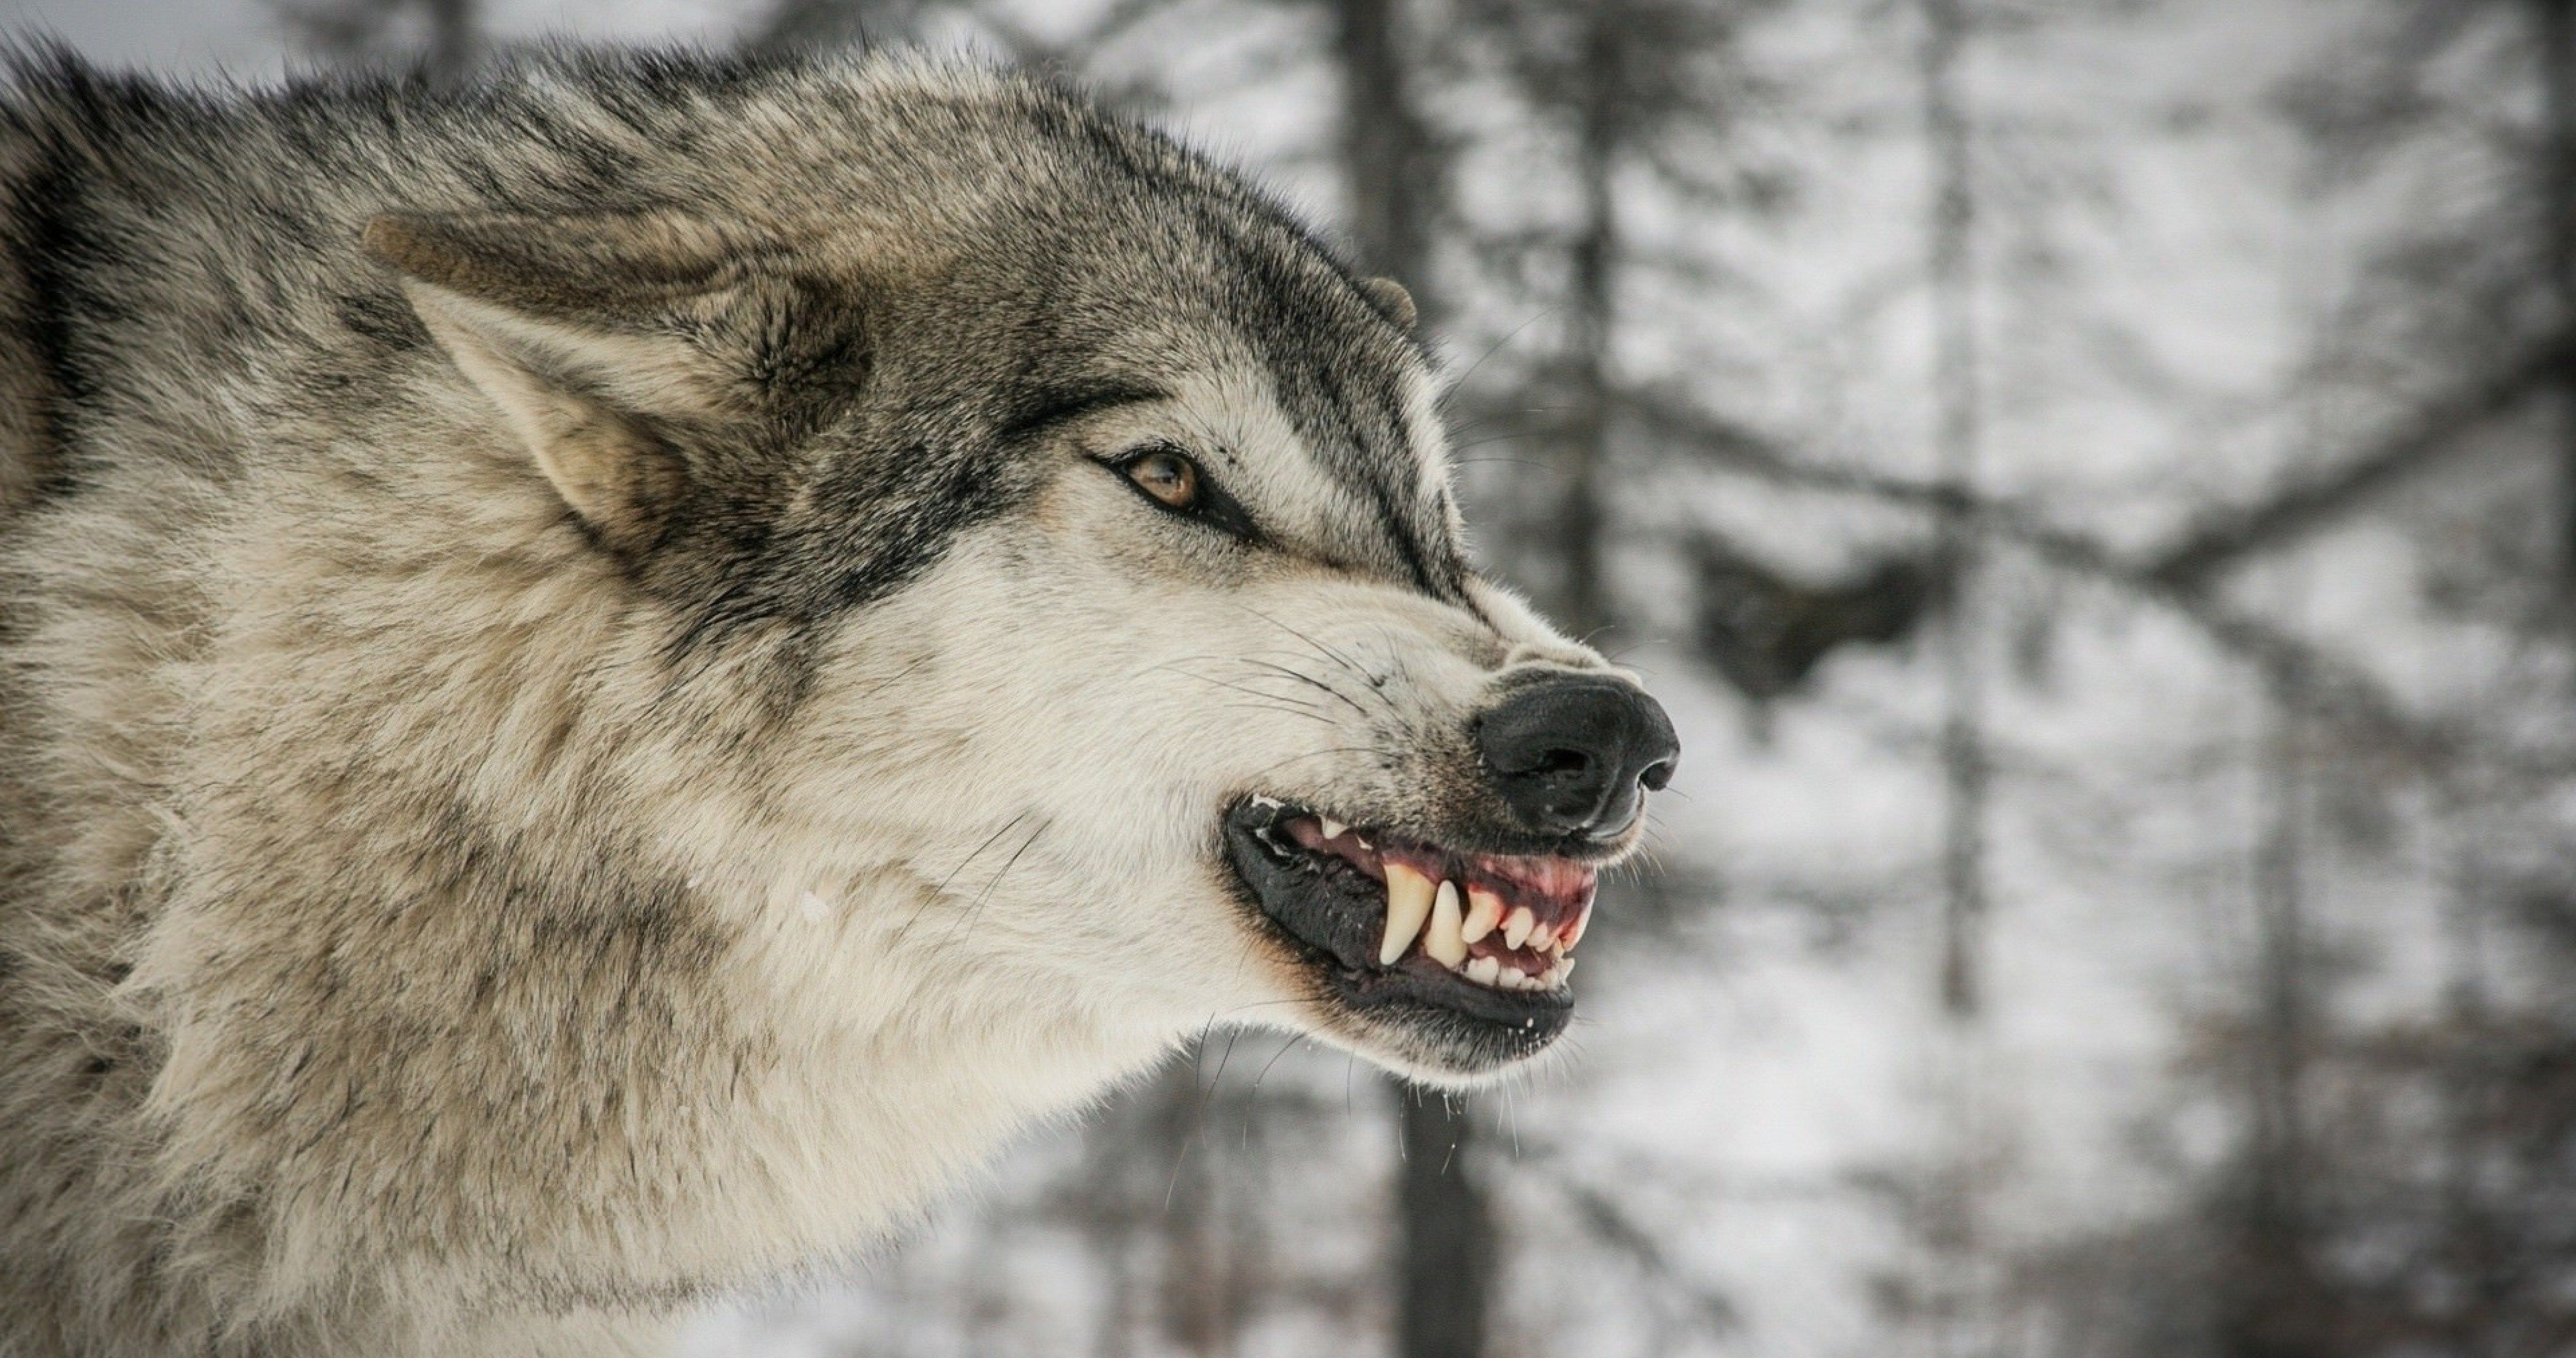 anger wolf face 4k ultra HD wallpaper High quality walls